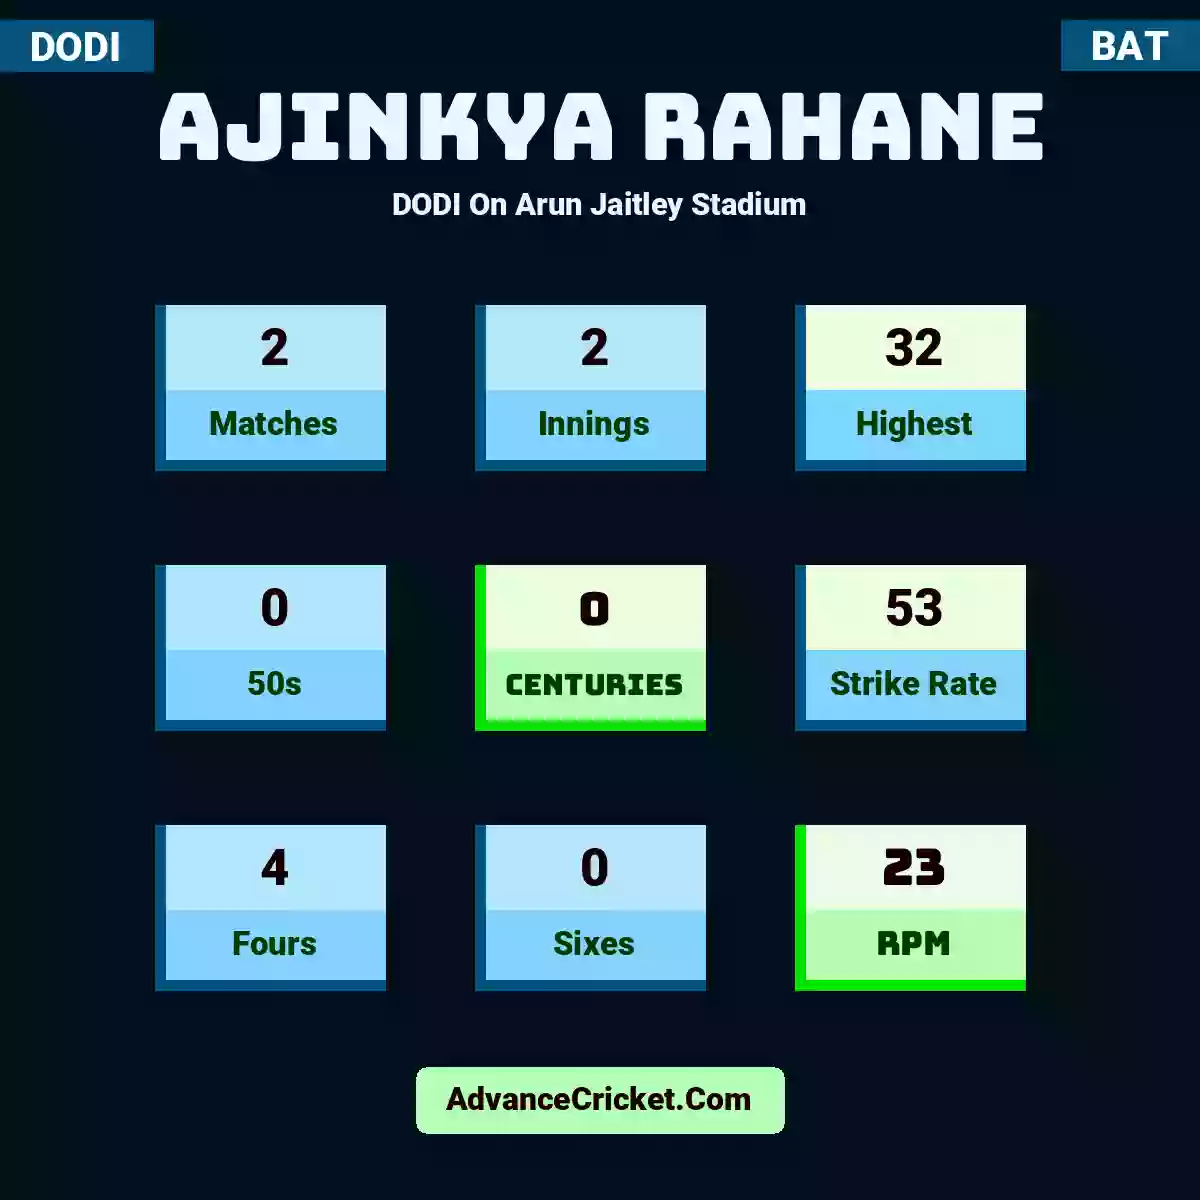 Ajinkya Rahane DODI  On Arun Jaitley Stadium, Ajinkya Rahane played 2 matches, scored 32 runs as highest, 0 half-centuries, and 0 centuries, with a strike rate of 53. A.Rahane hit 4 fours and 0 sixes, with an RPM of 23.